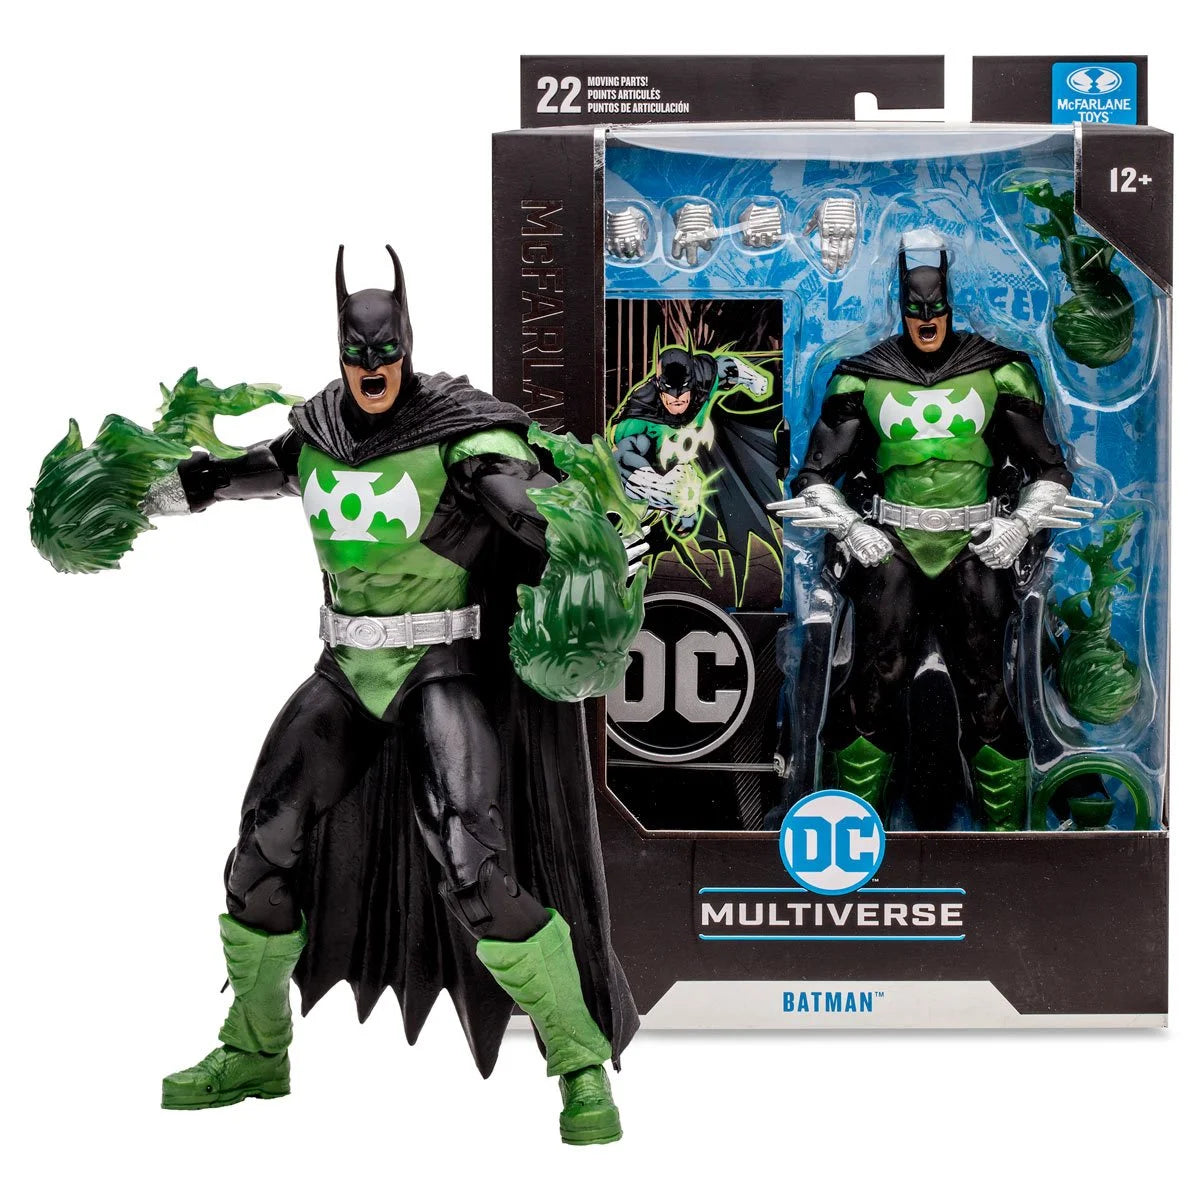 DC McFarlane Collector Edition Wave 3 Batman as Green Lantern 7-Inch Scale Action Figure